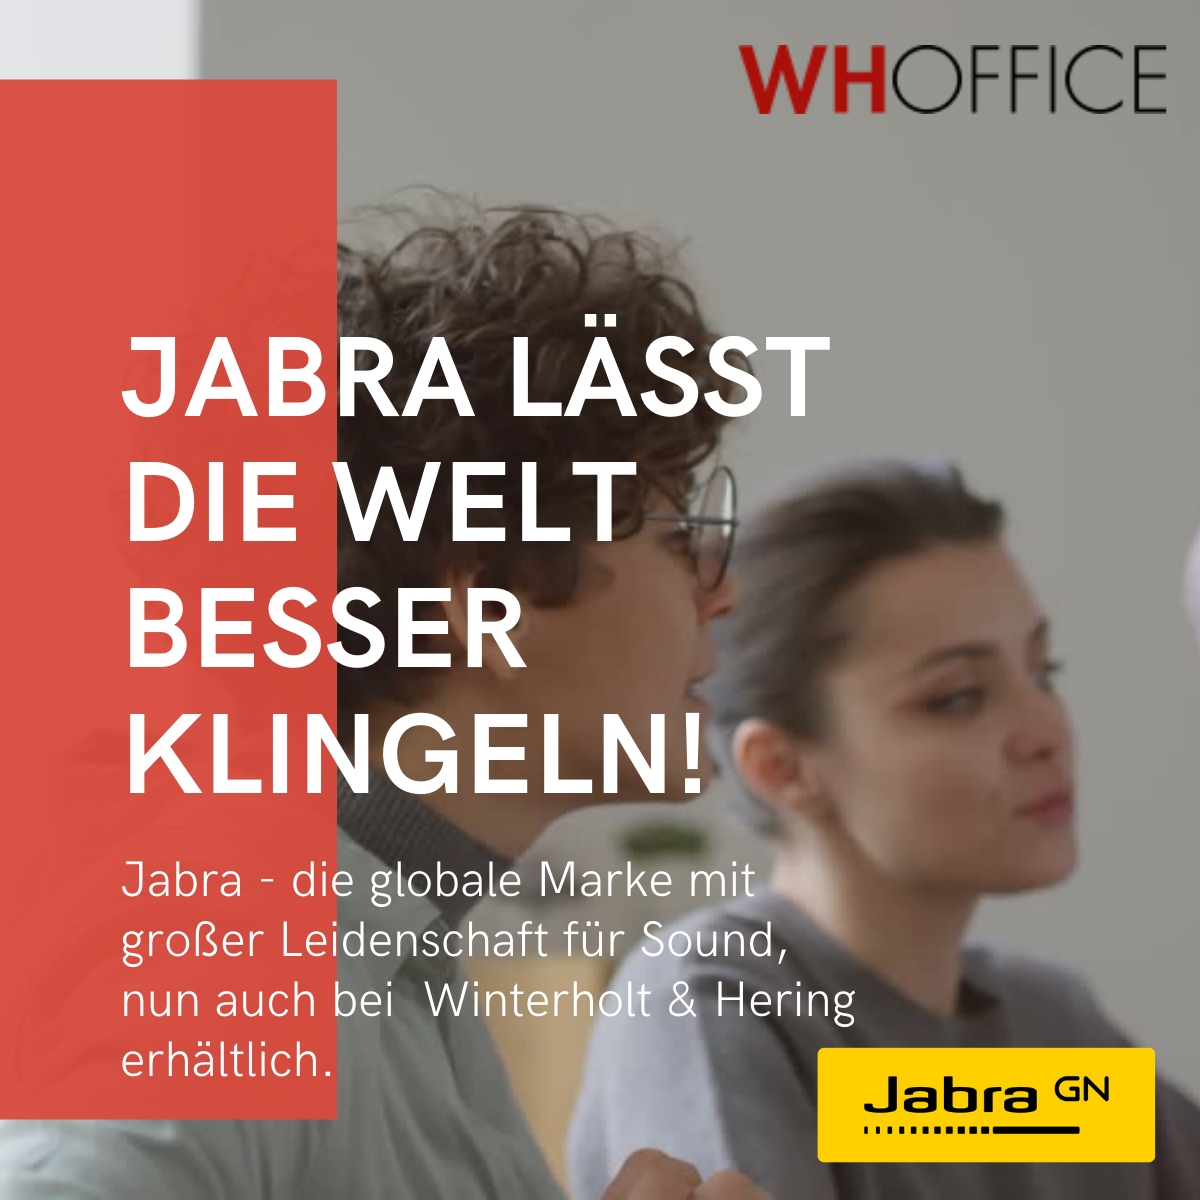 WHOffice - Jabra neu im Produktportfolio